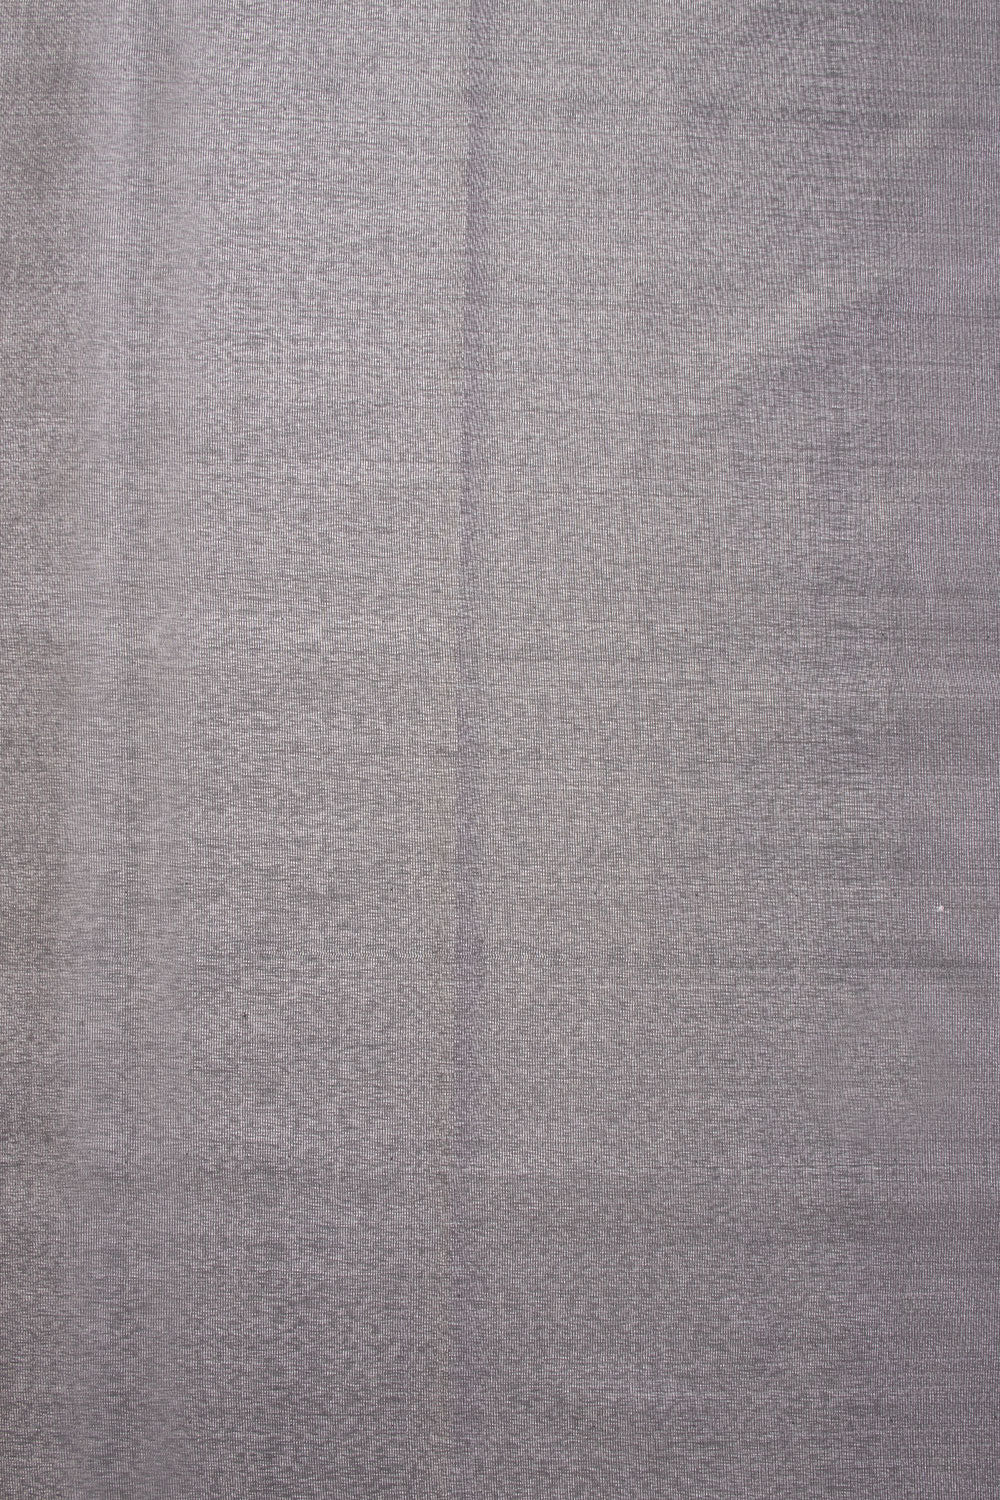 Grey South Silk Cotton Saree 10069884 - Avishya